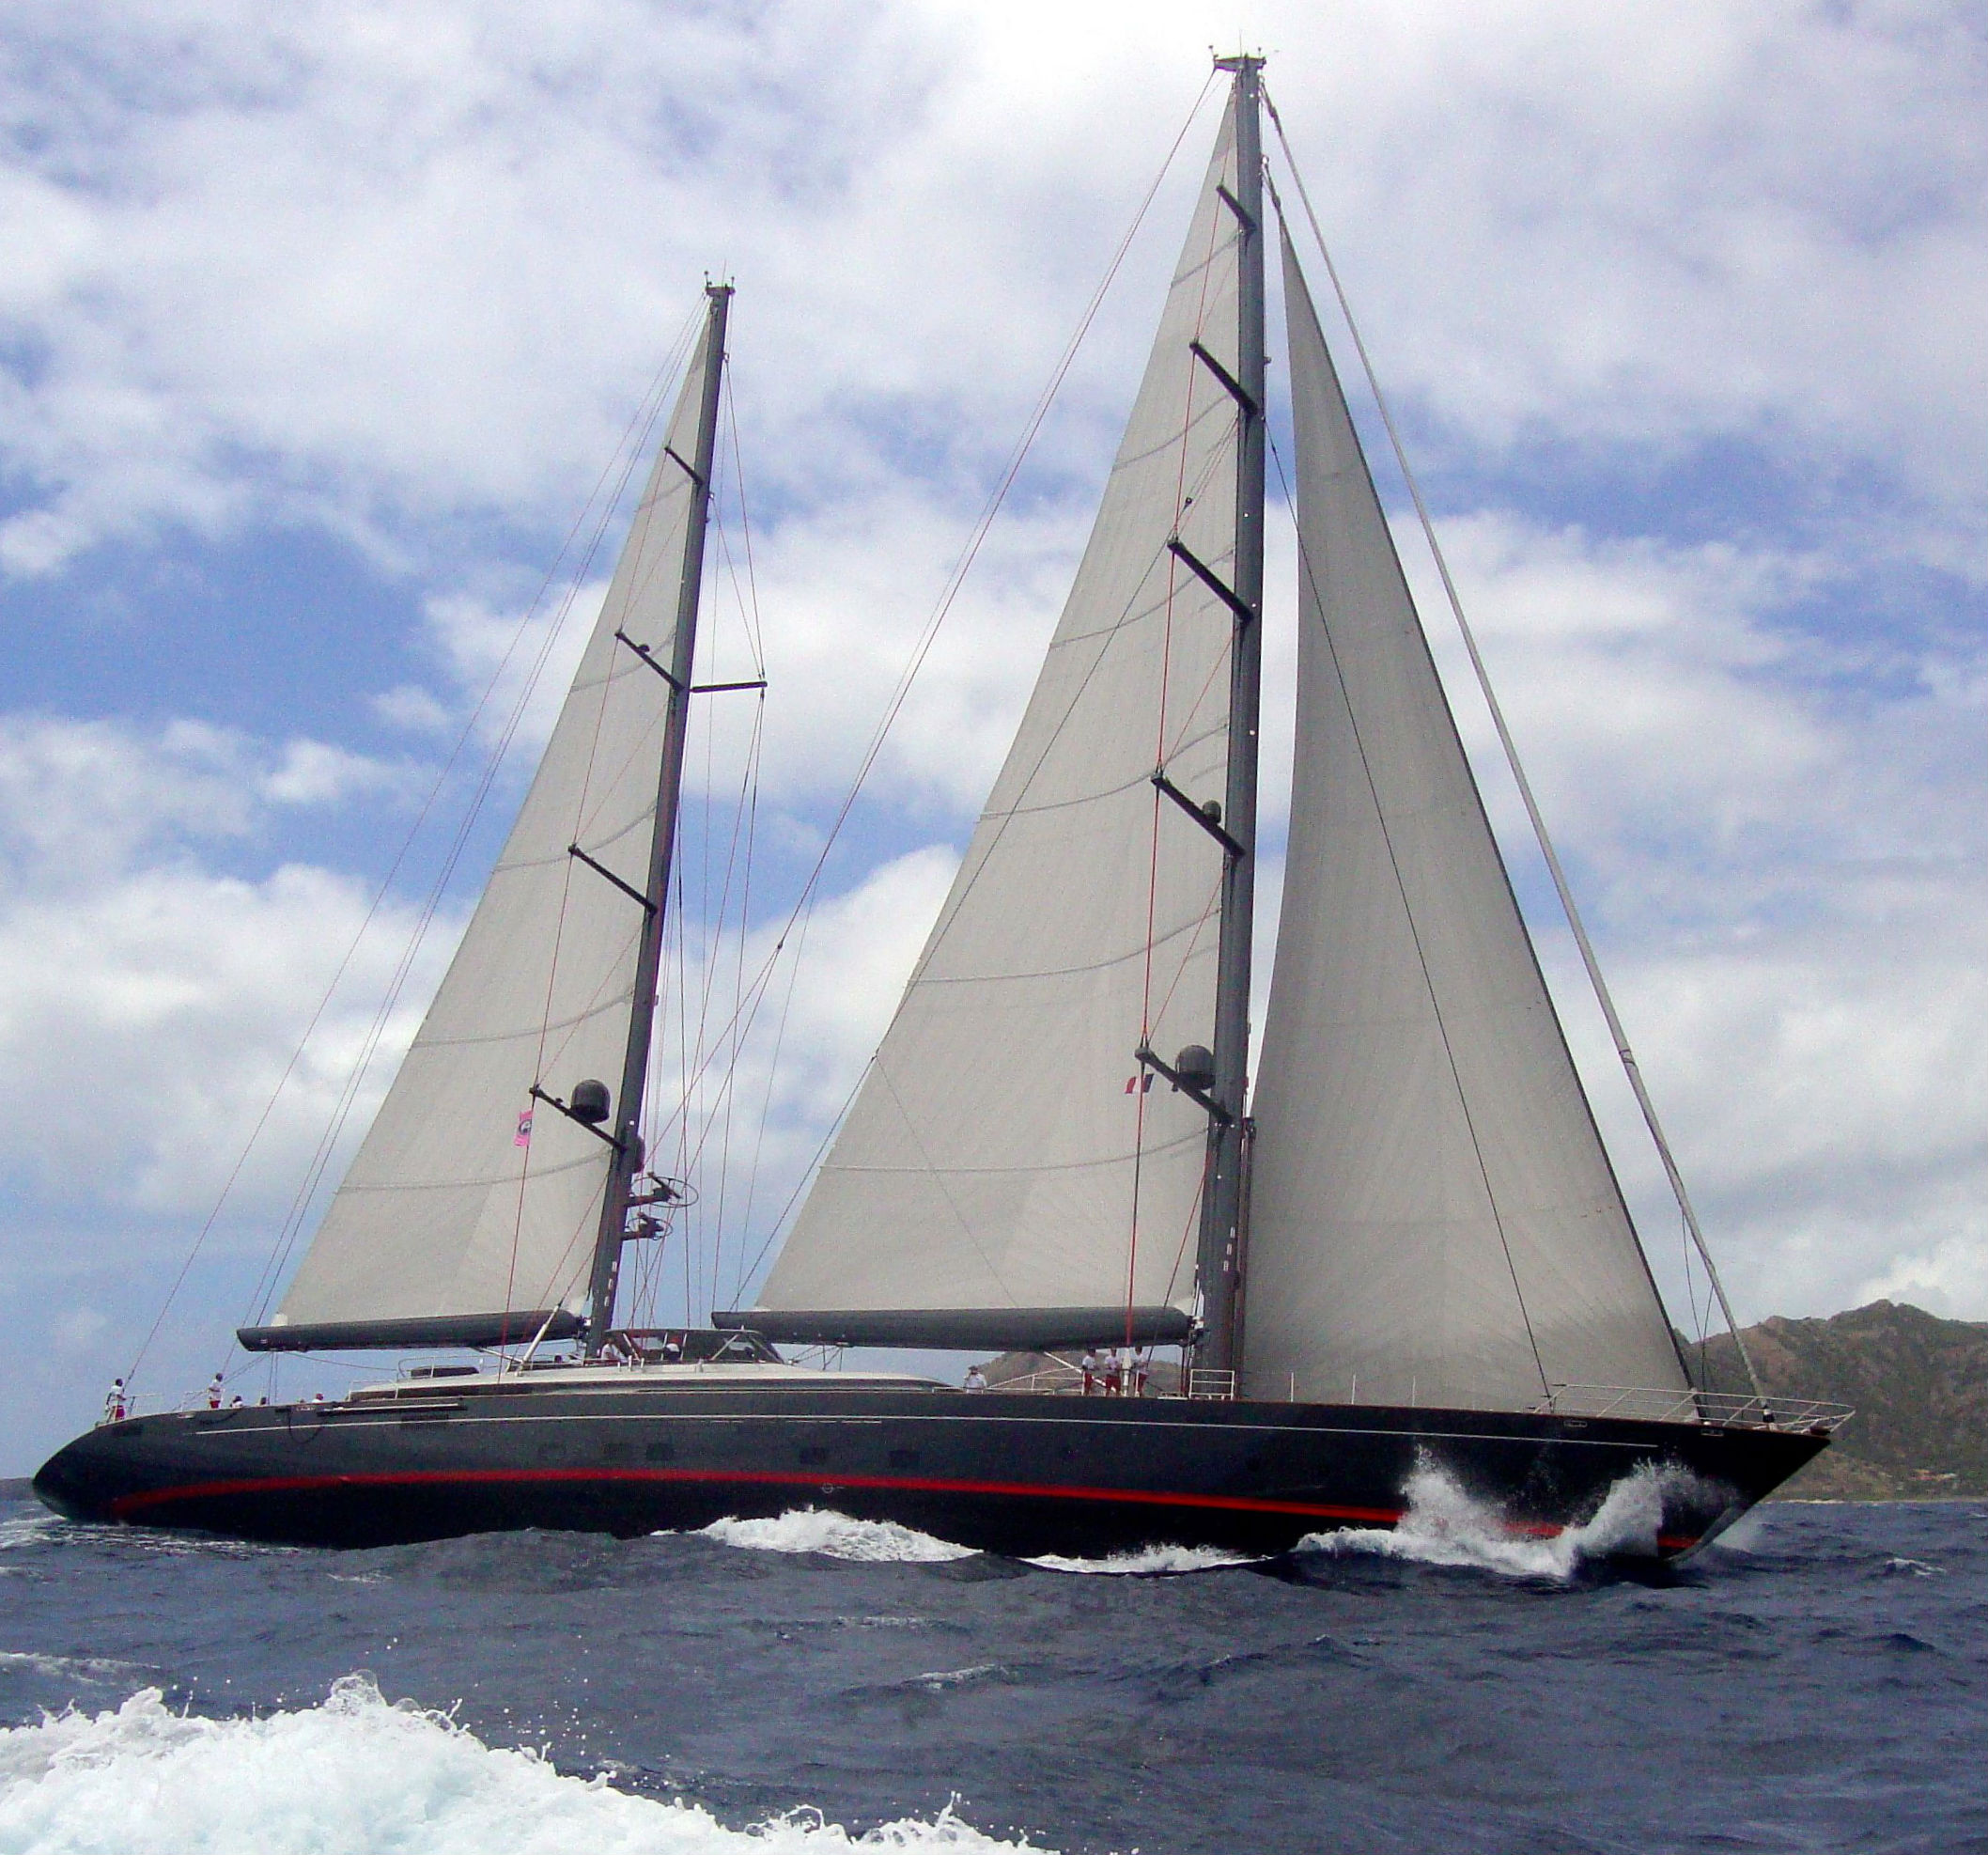 Seahawk 60 metre sailing yacht, Perini Navi and Ron Holland Design collaboration